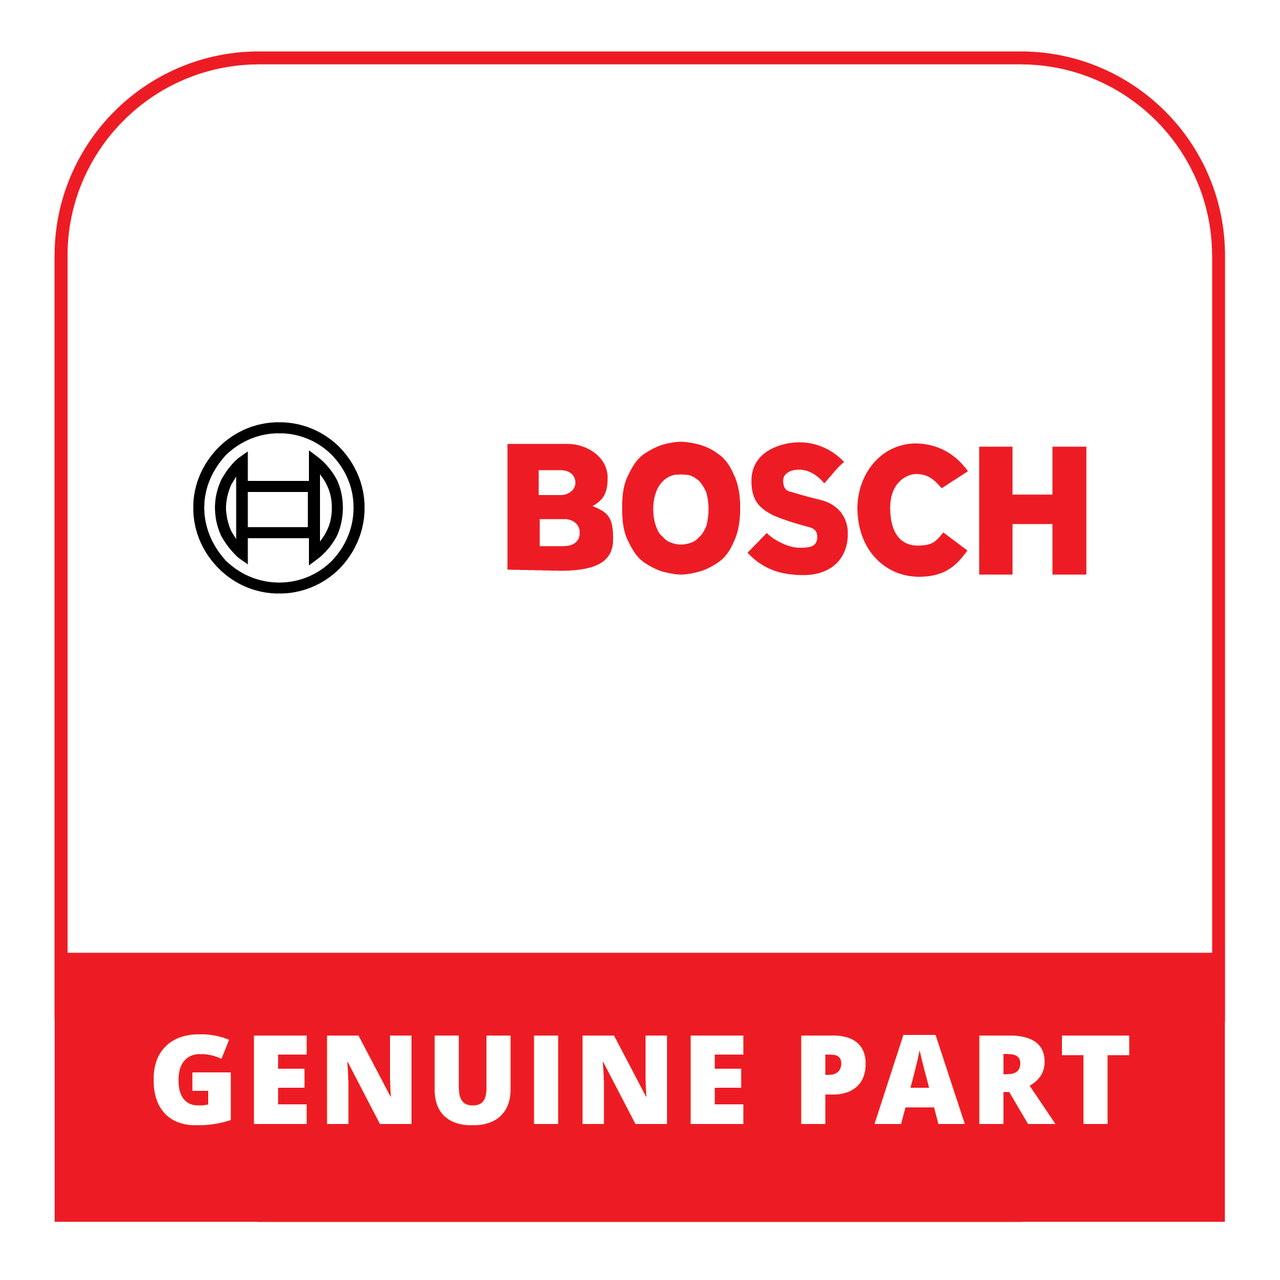 Bosch (Thermador) 11033771 - Shelf - Genuine Bosch (Thermador) Part